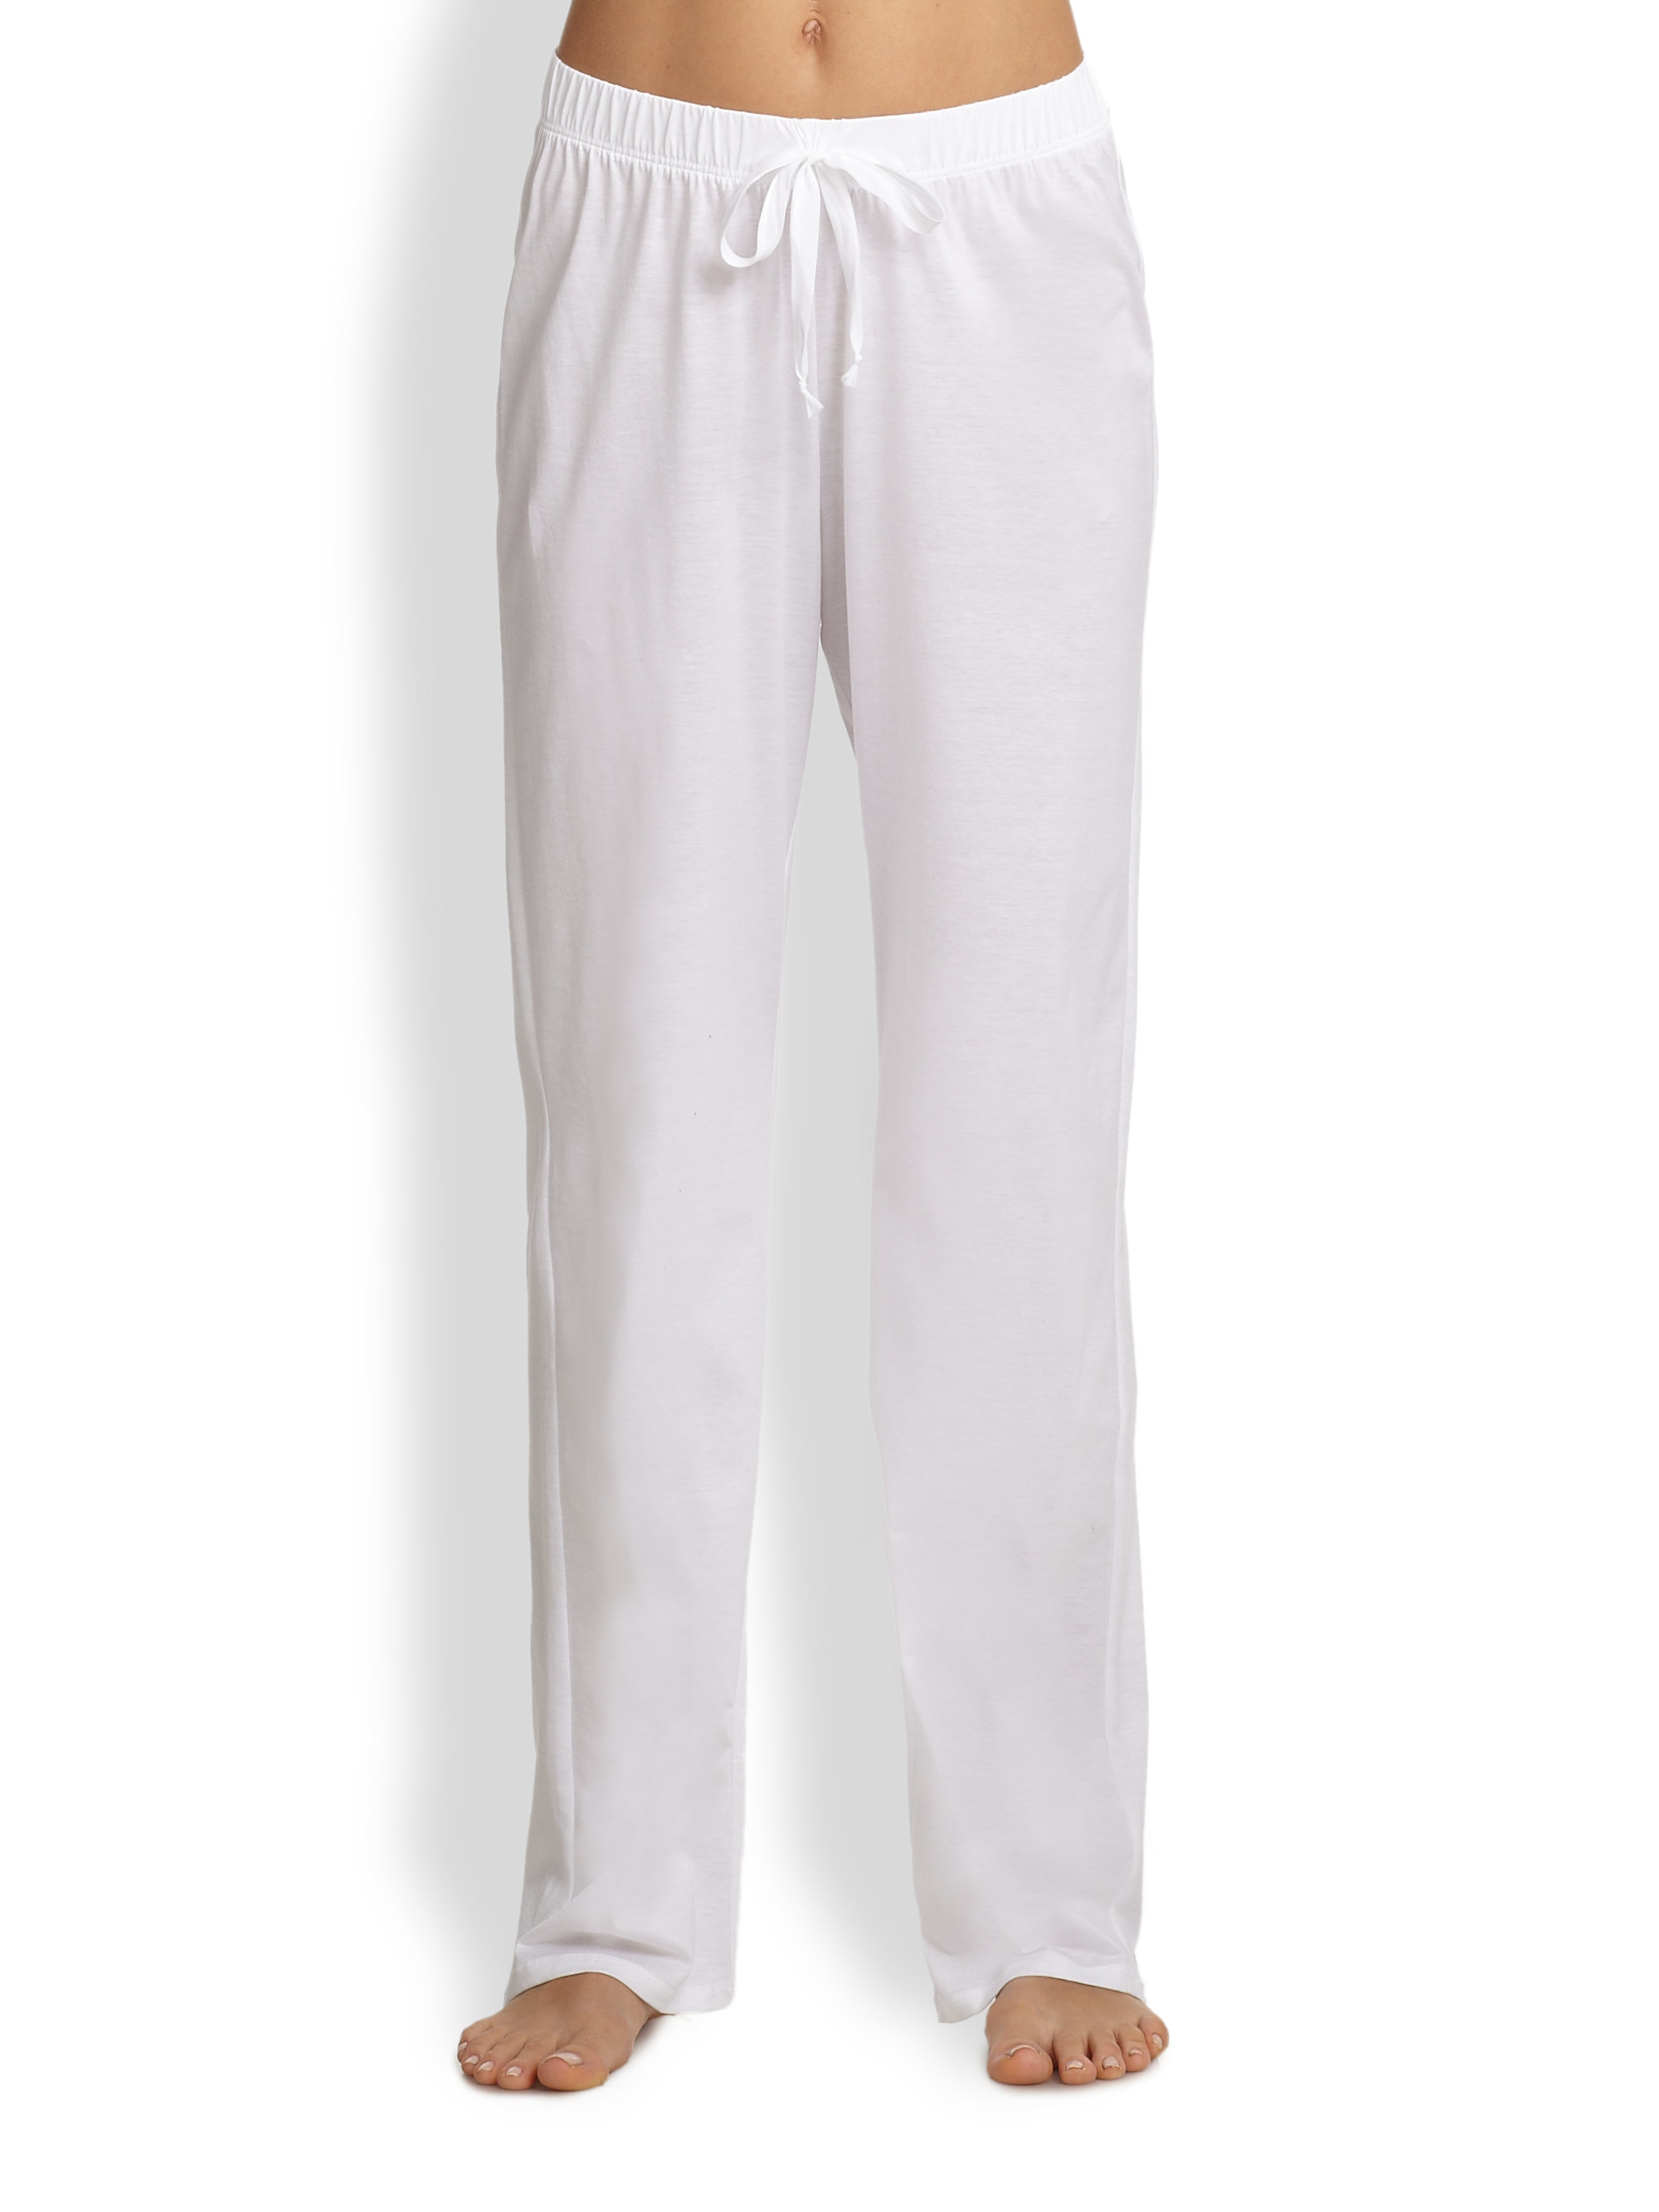 Hanro Drawstring Lounge Pants in White - Save 10% | Lyst